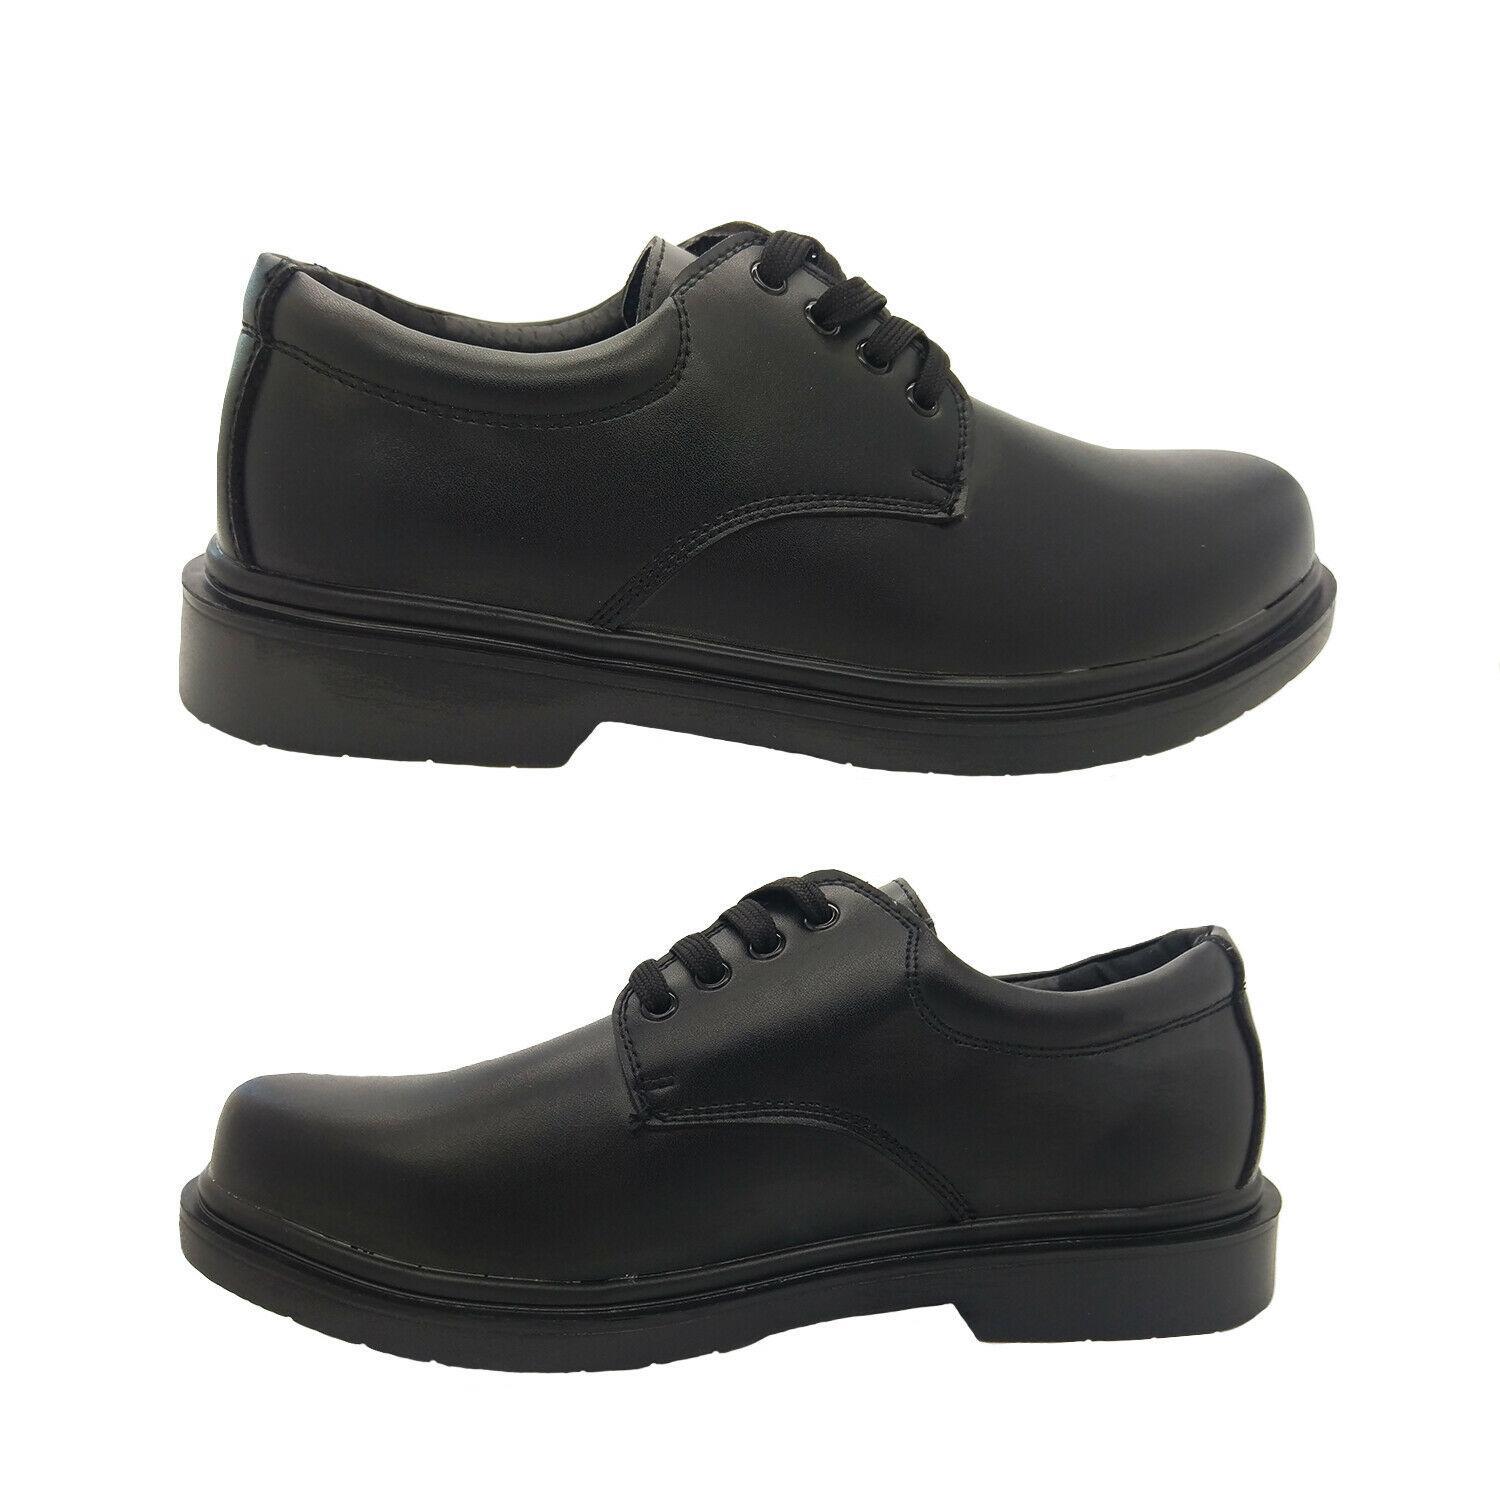 Boys Shoes Grosby Hamburg Jnr Black Boys/Youth Leather School Shoe Size 13-5 NEW Black 4